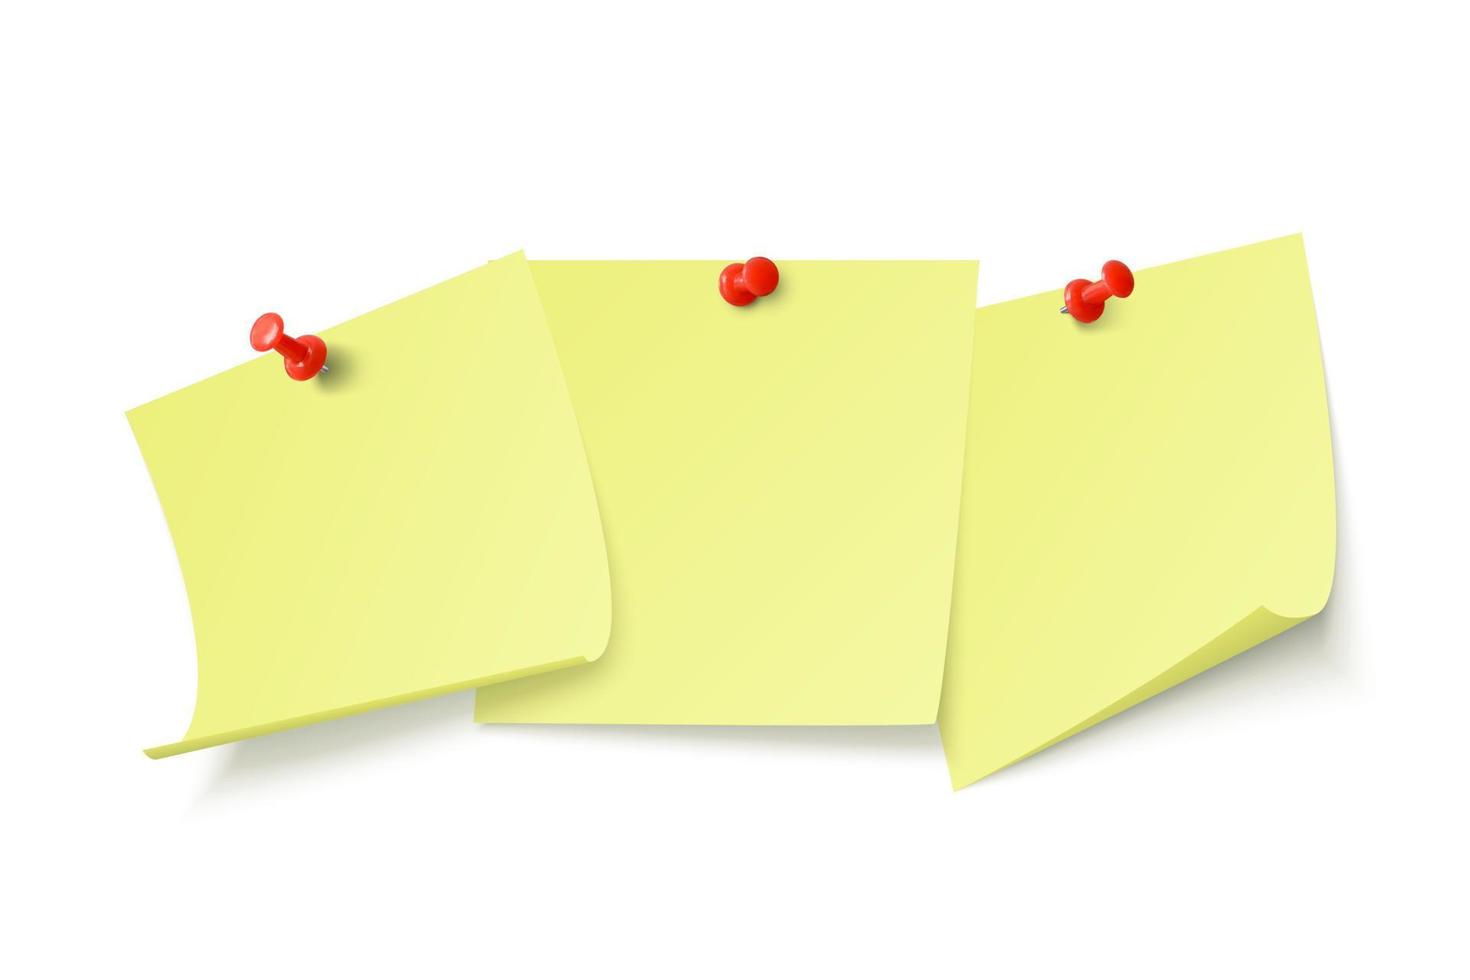 vacío amarillo pegatinas con espacio para texto o mensaje atascado por acortar a pared. vector ilustración aislado en blanco antecedentes